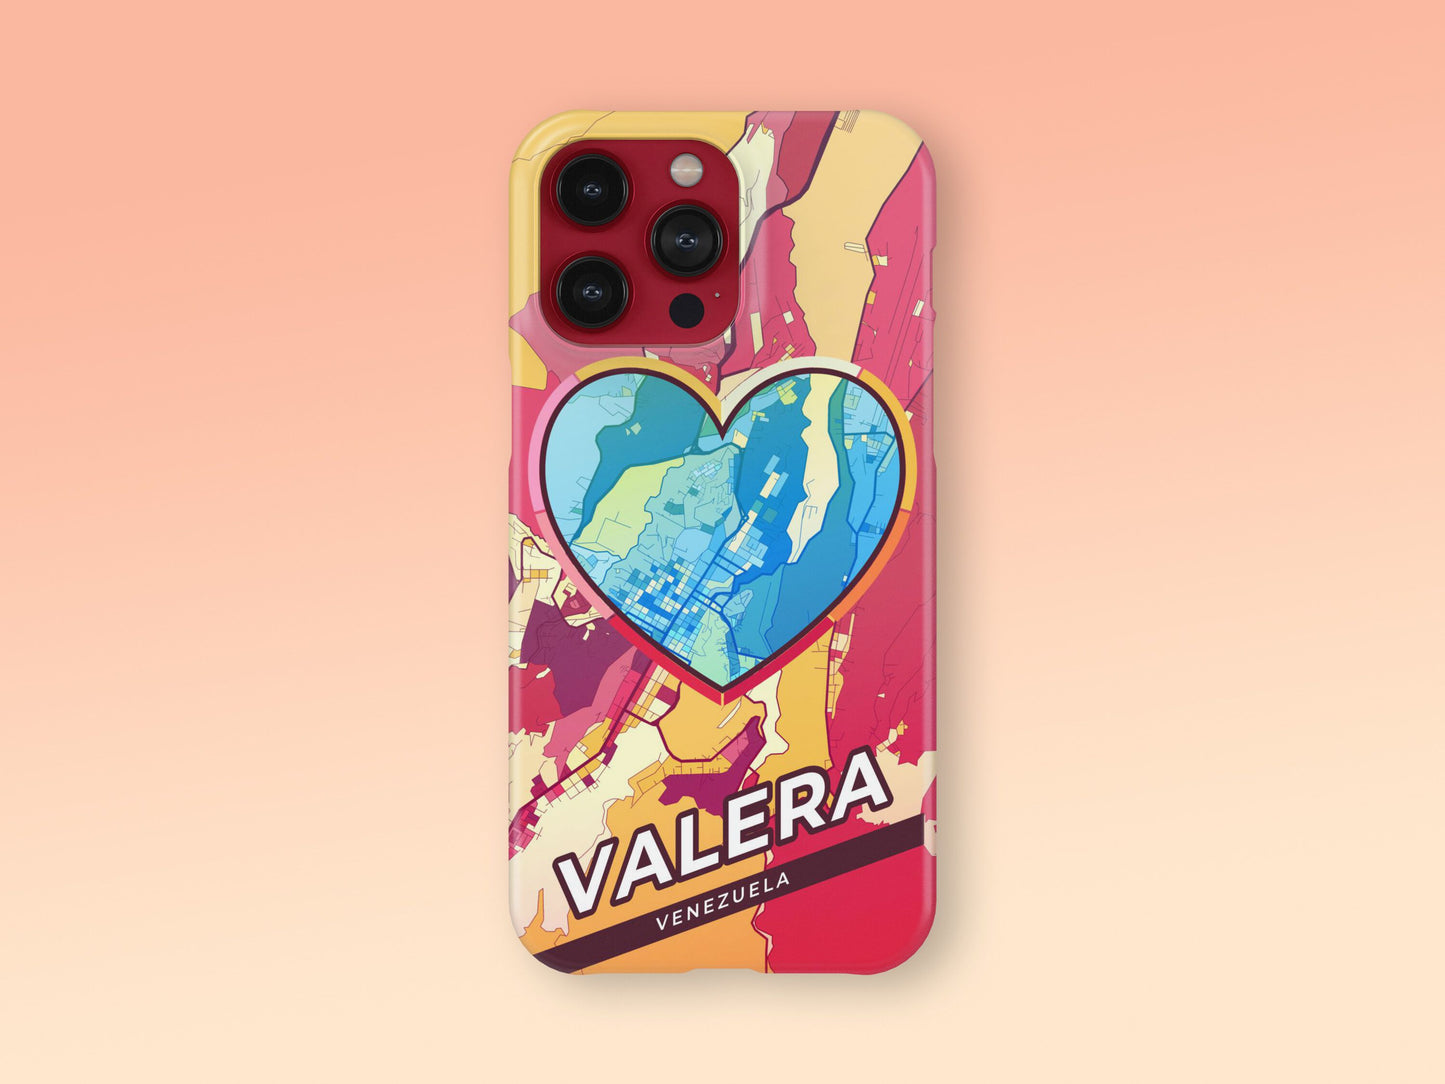 Valera Venezuela slim phone case with colorful icon. Birthday, wedding or housewarming gift. Couple match cases. 2